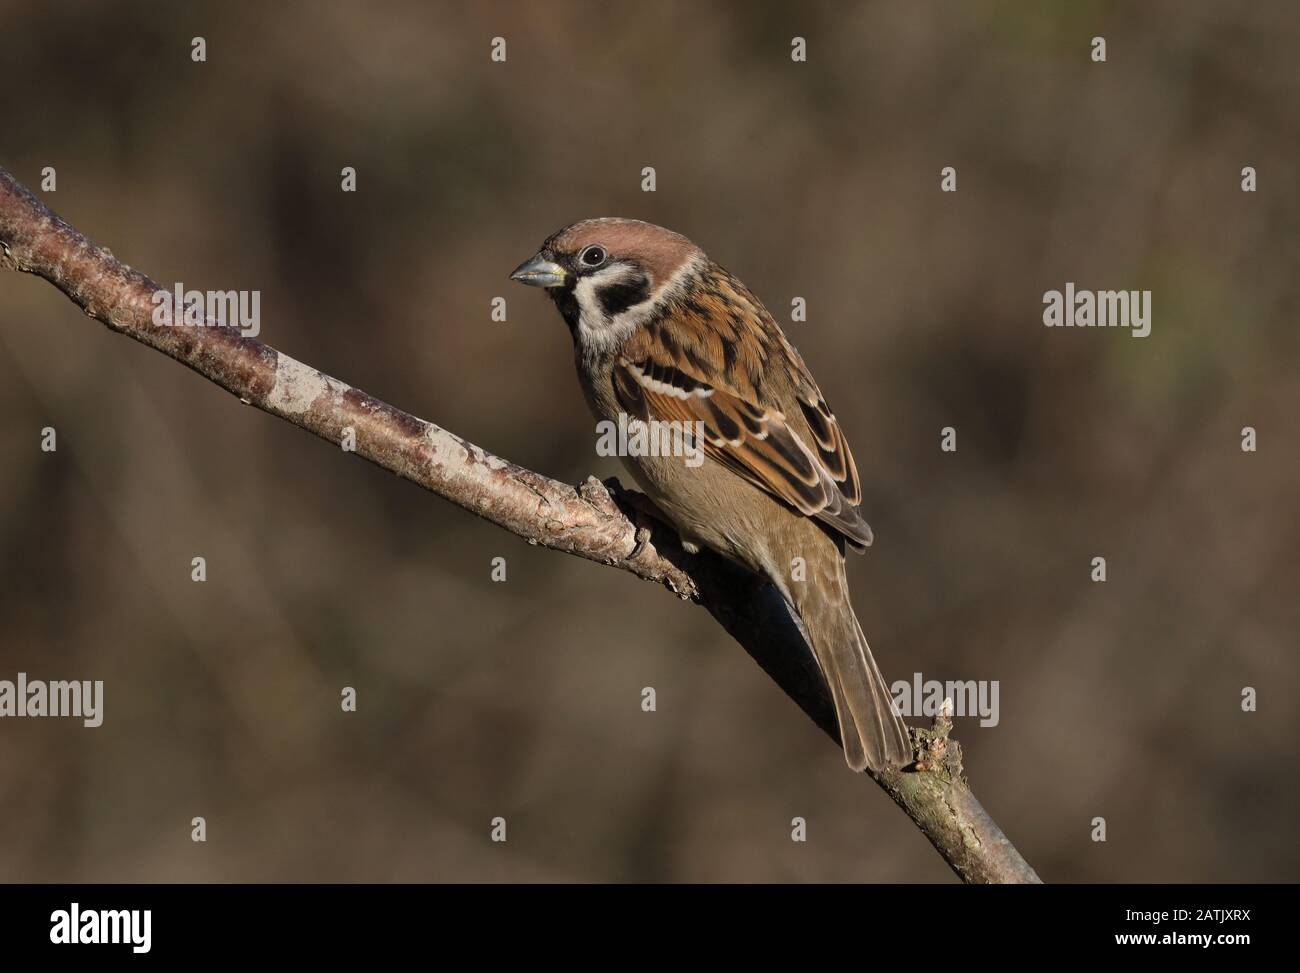 Eurasian tree sparrow, Passer montanus sitting on perch, clean background Stock Photo